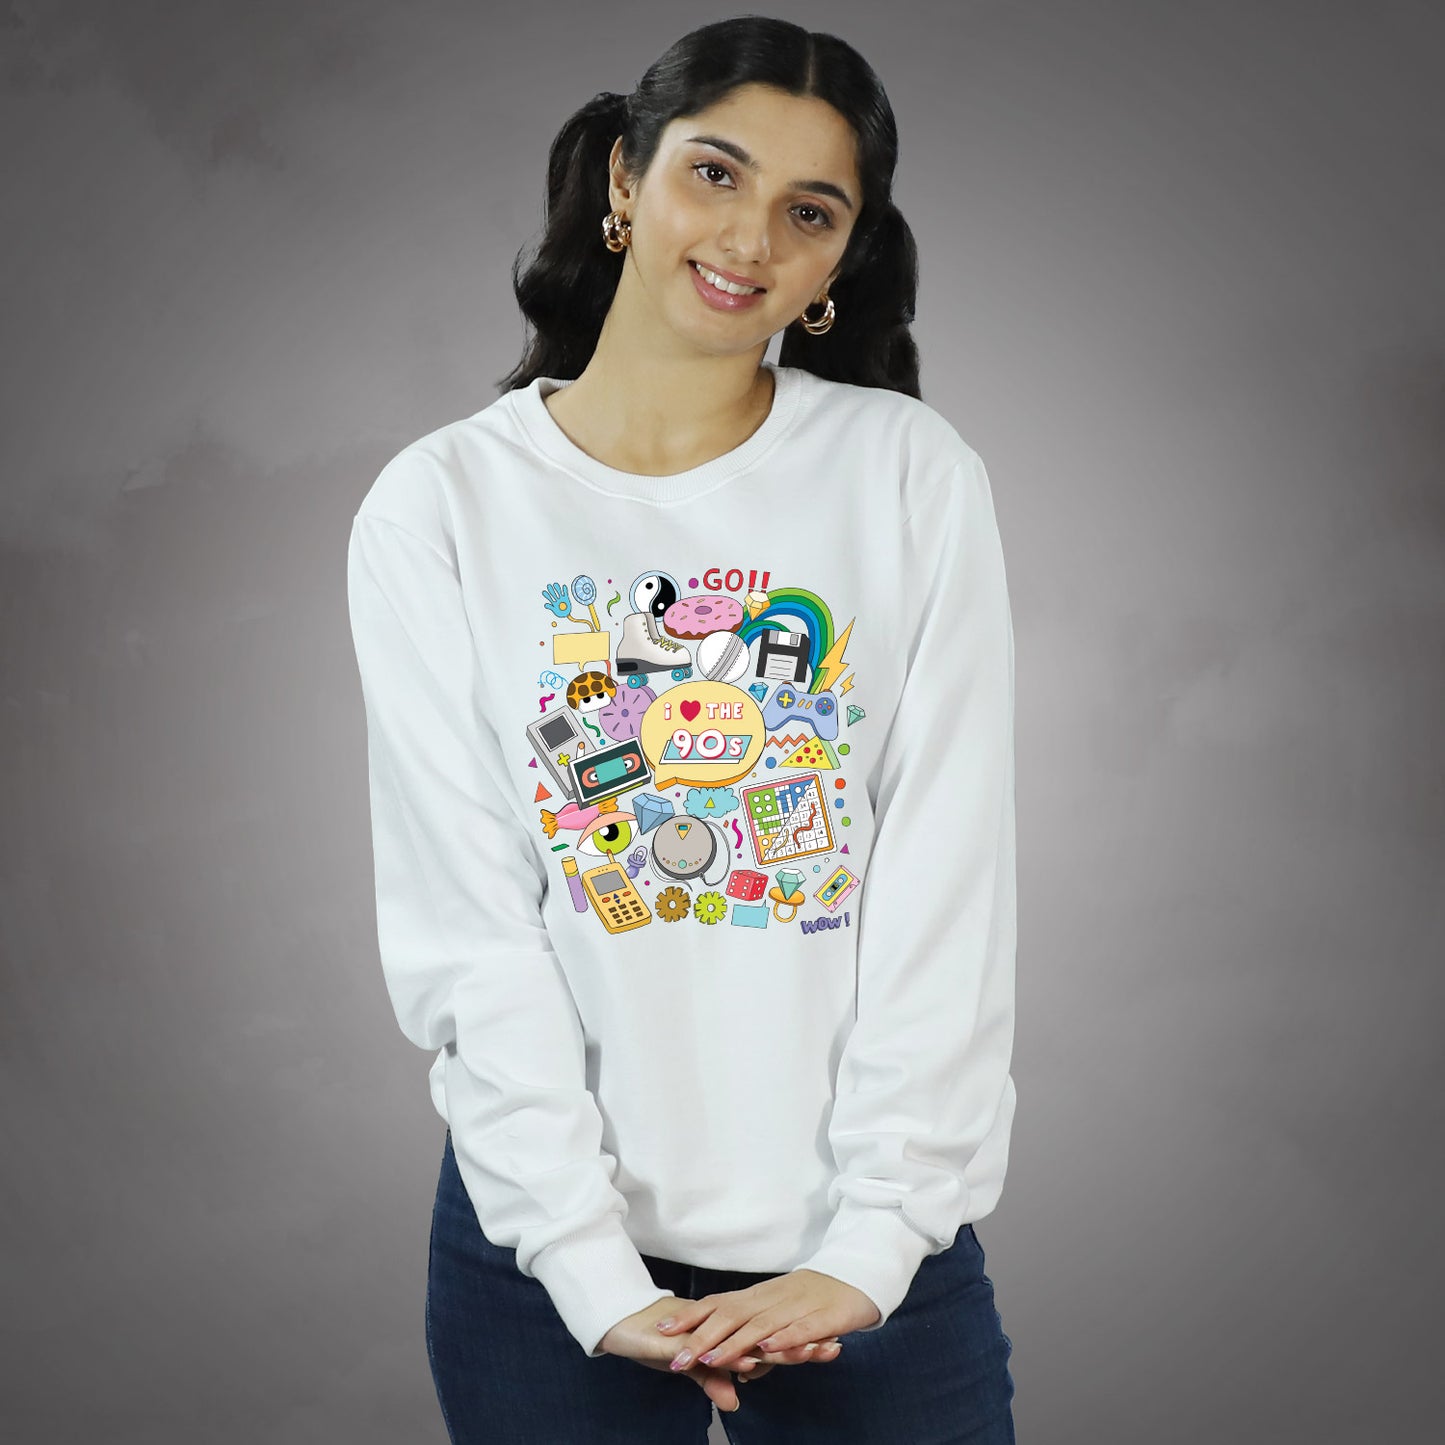 90's Love on Sweatshirt